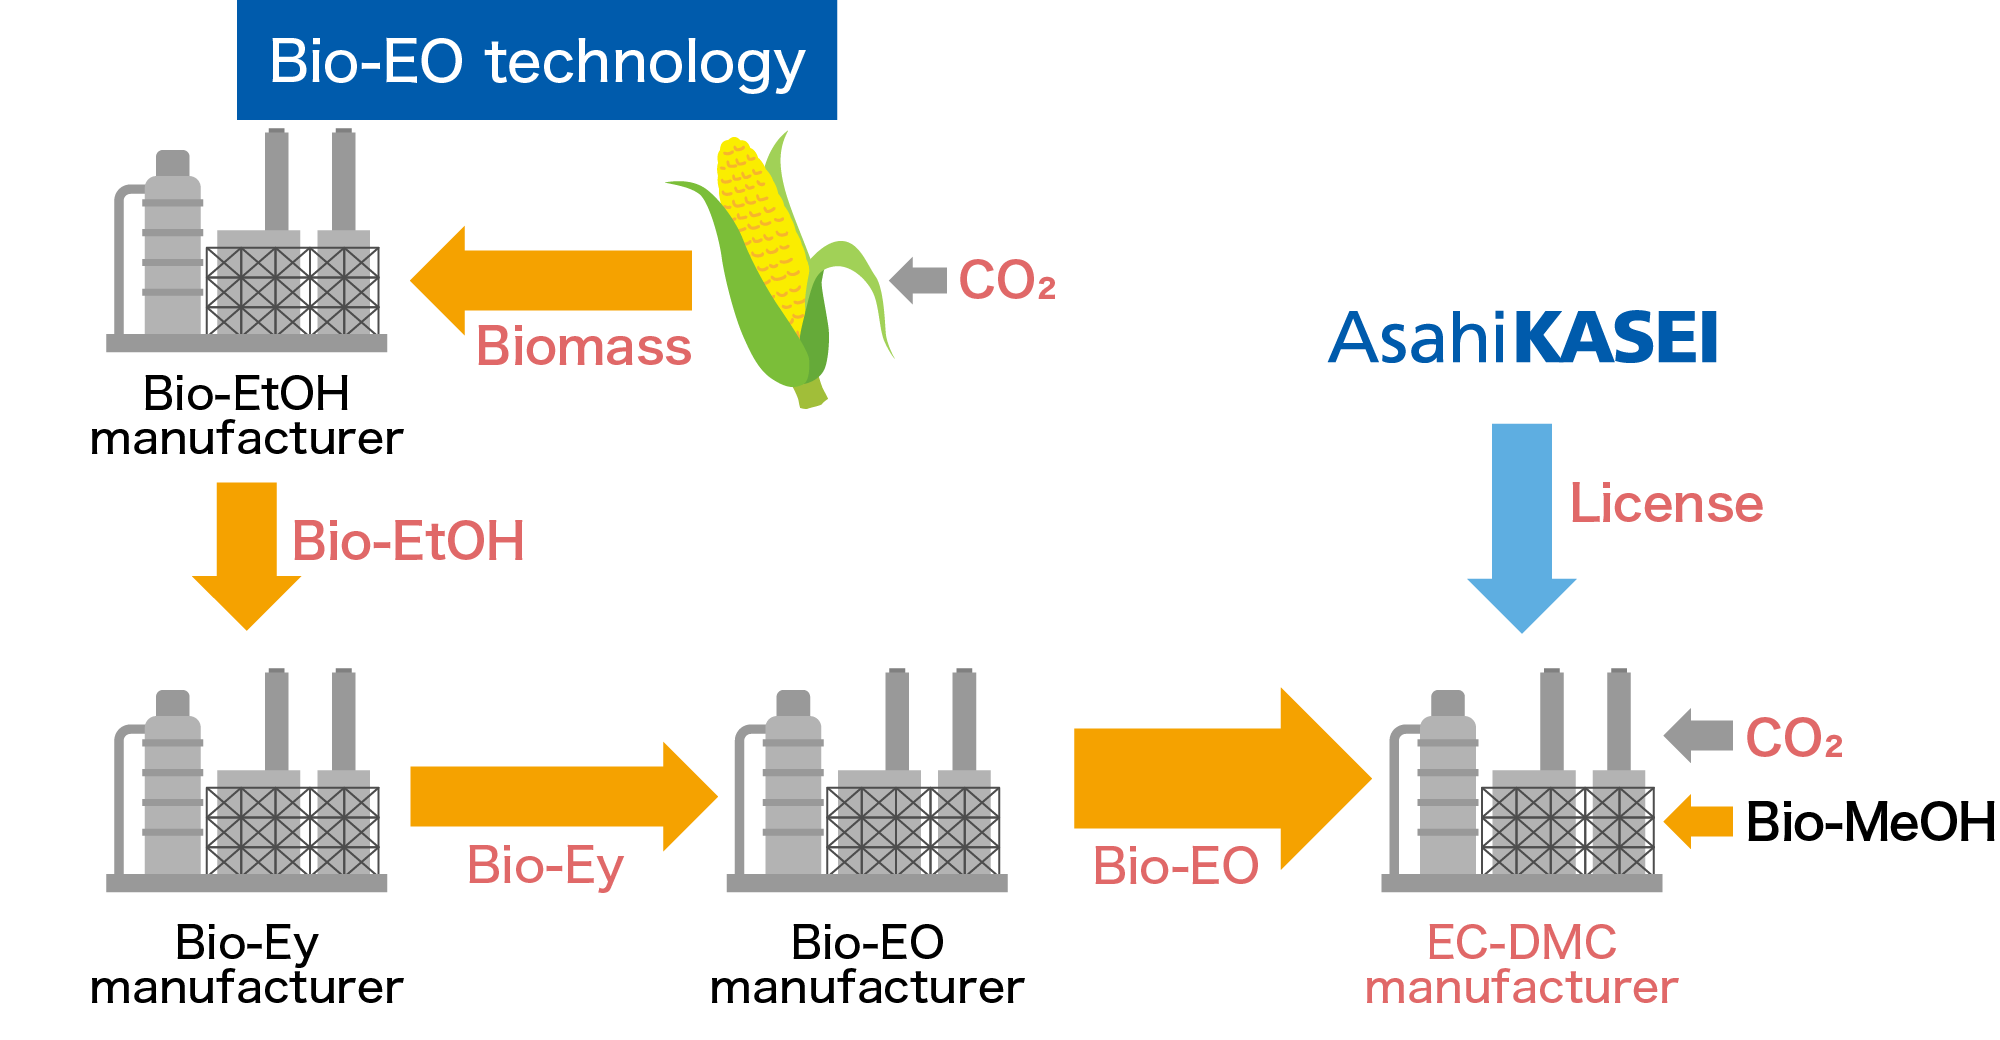 Utilization of bio-ethylene oxide (Bio-EO) technology